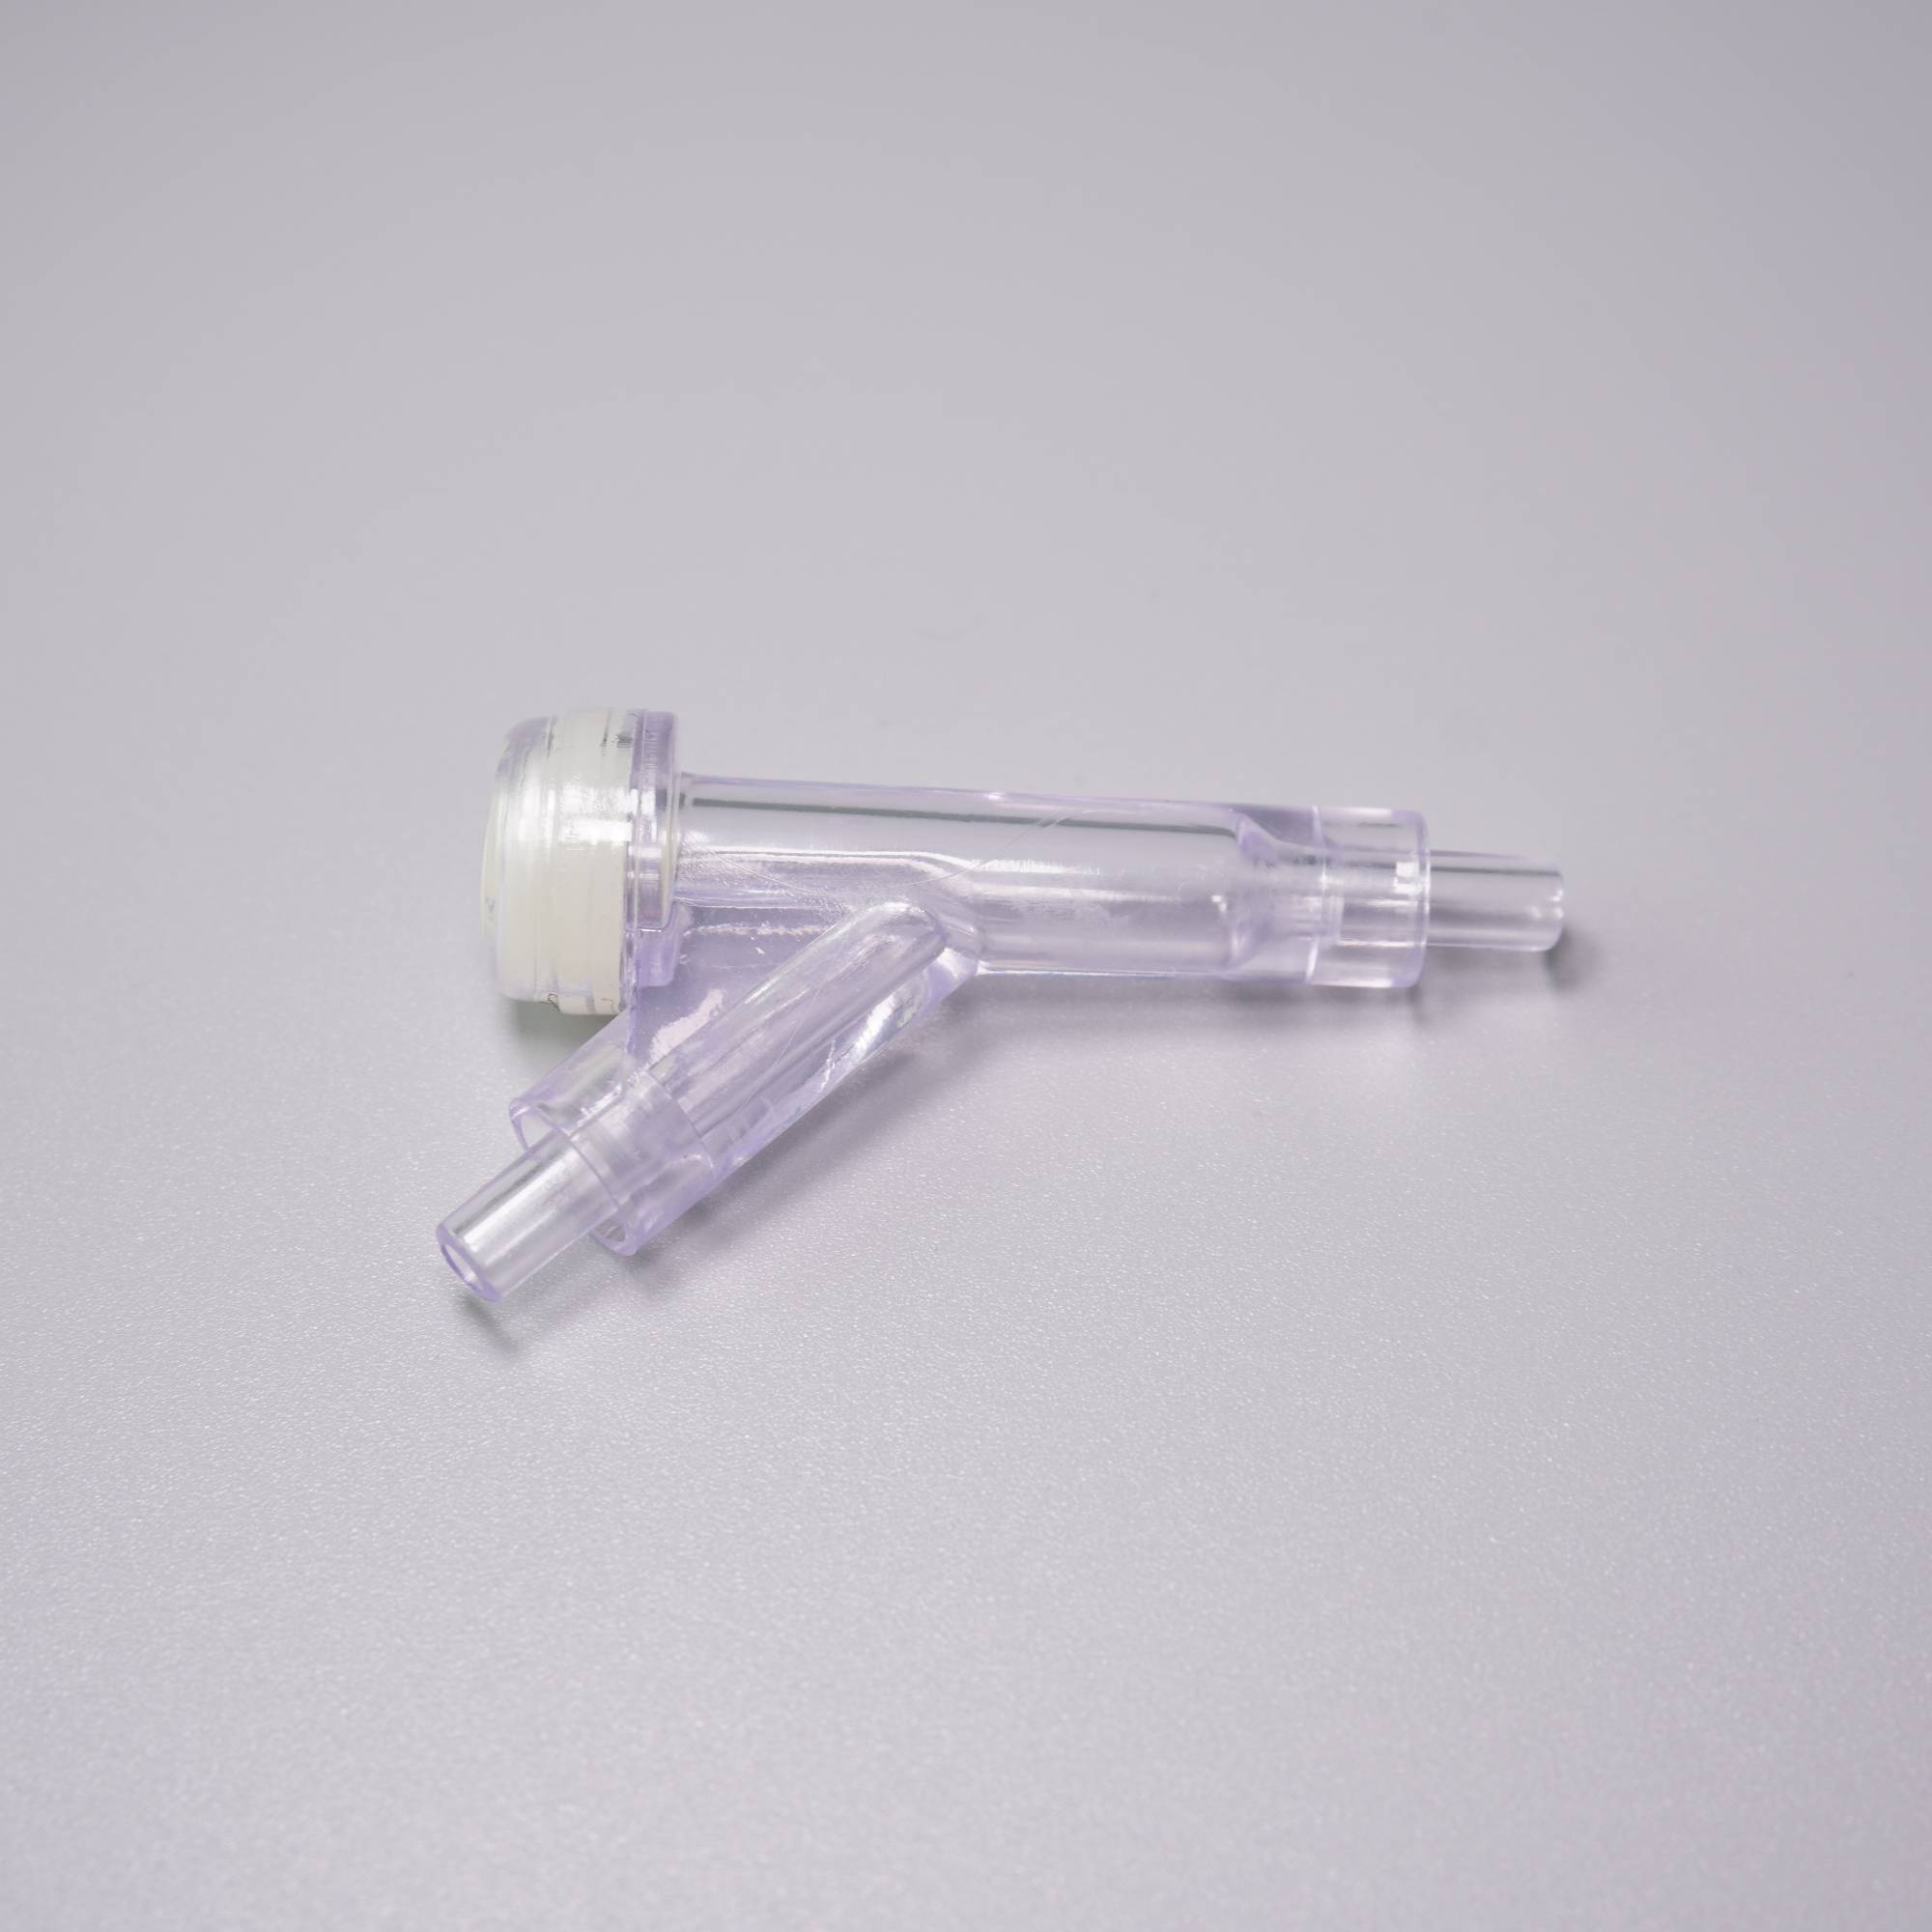 Needle Injection Sites NO.52019